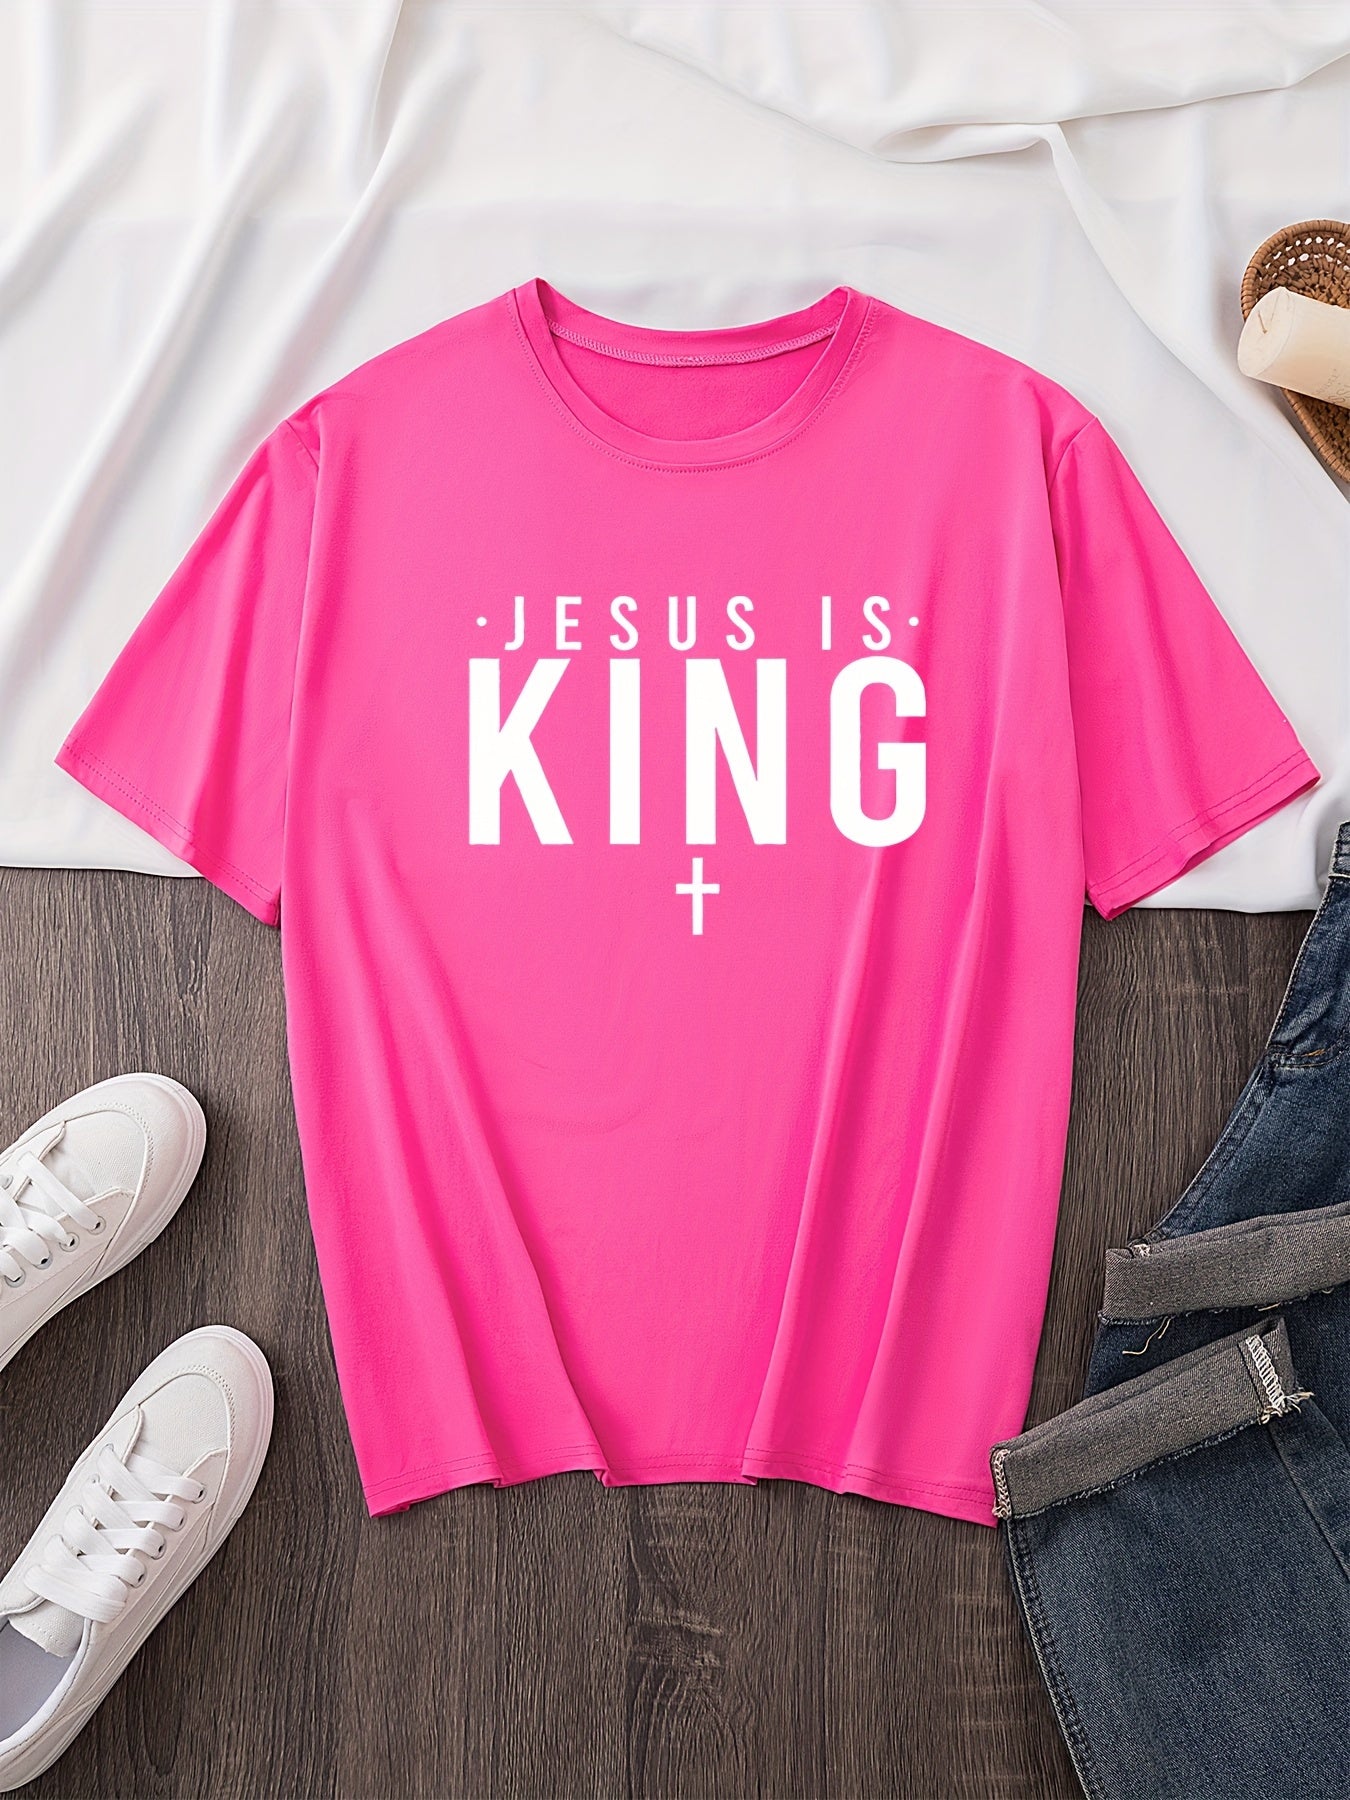 Jesus Is King Plus Size Women's Christian T-shirt claimedbygoddesigns